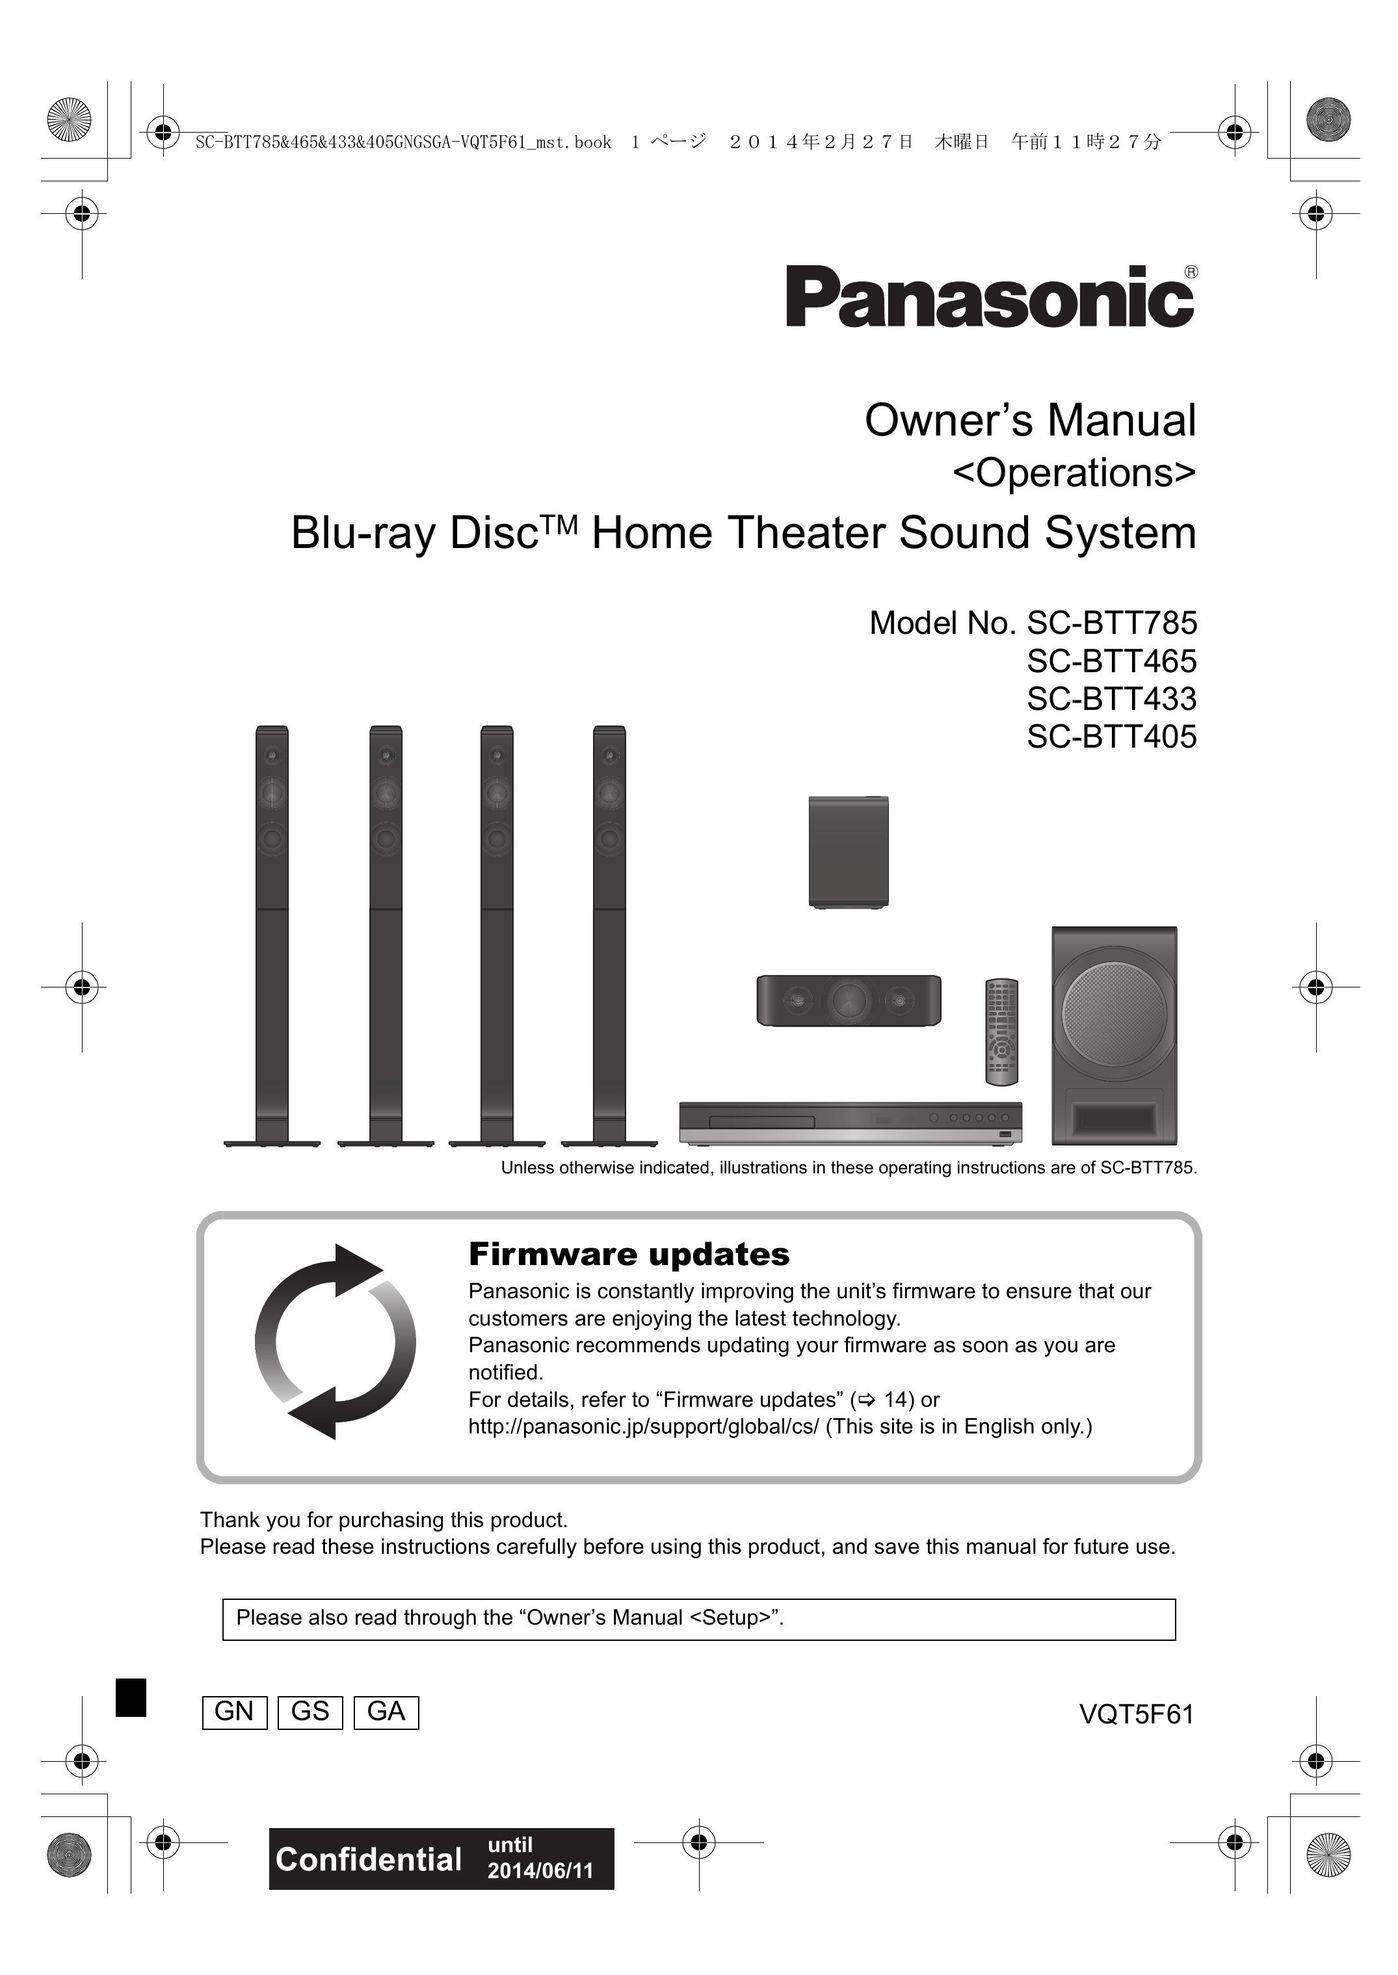 Panasonic SC-BTT405 Video Game Sound System User Manual